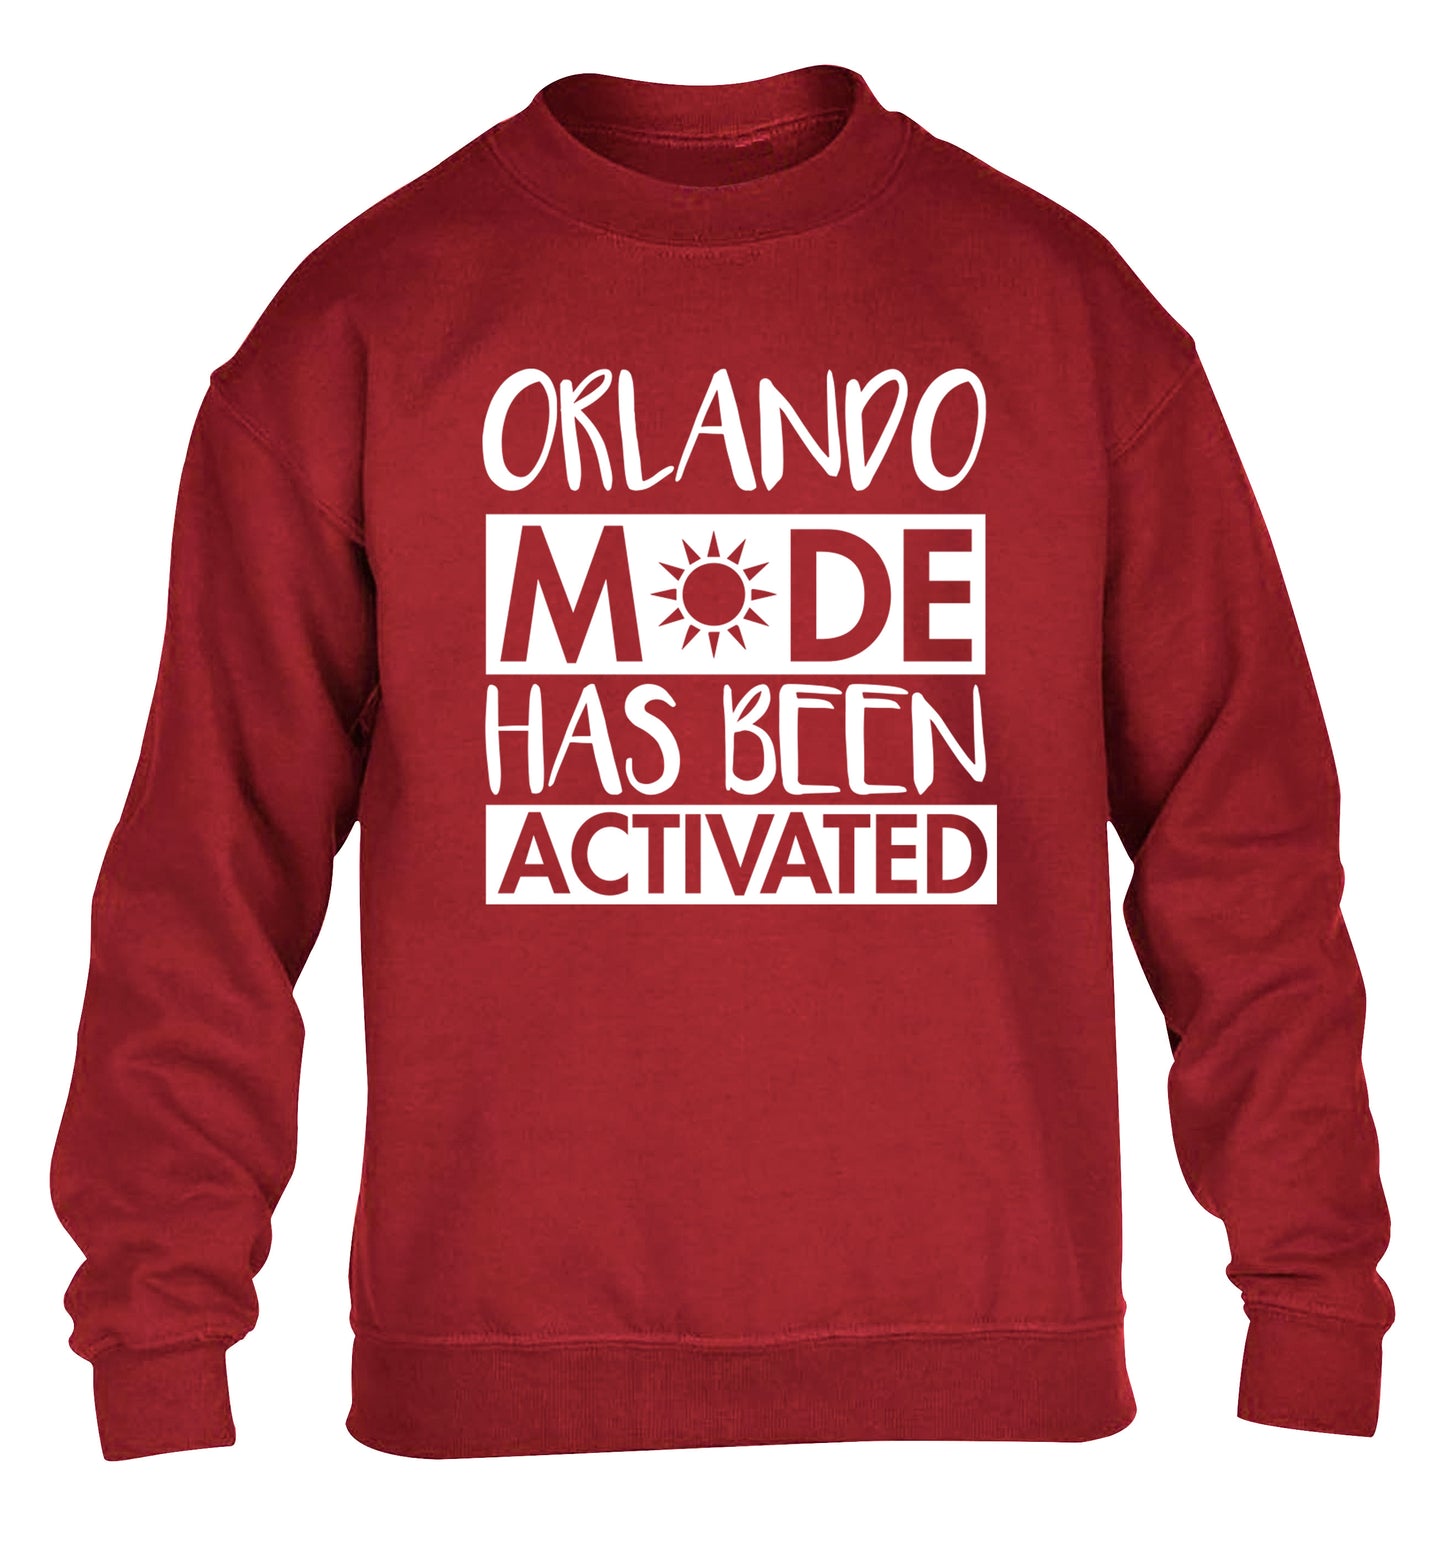 Orlando mode has been activated children's grey sweater 12-13 Years